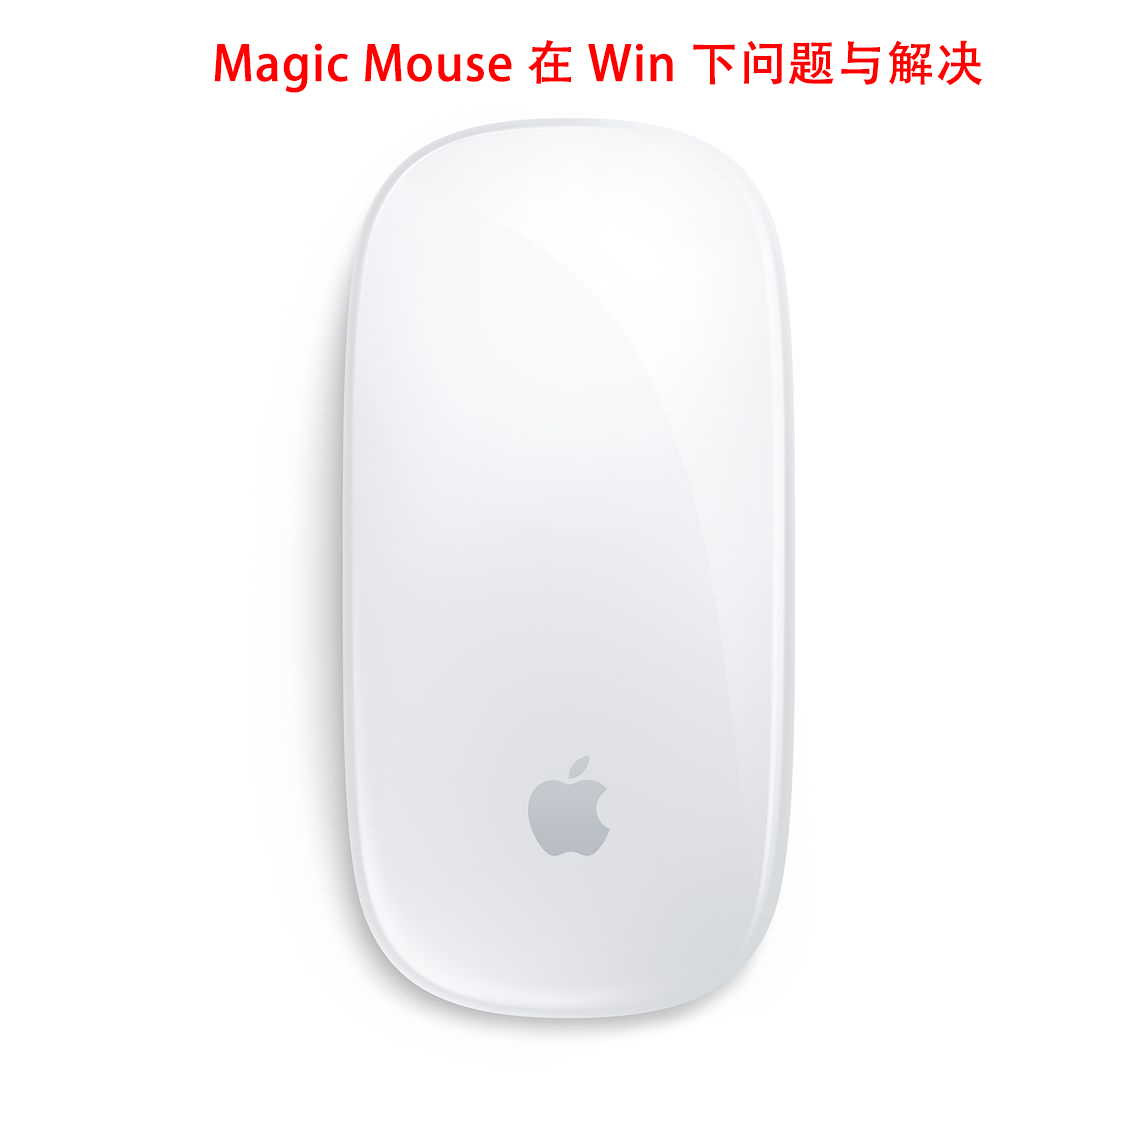 Magic Mouse（妙控鼠标）在win10下问题与解决